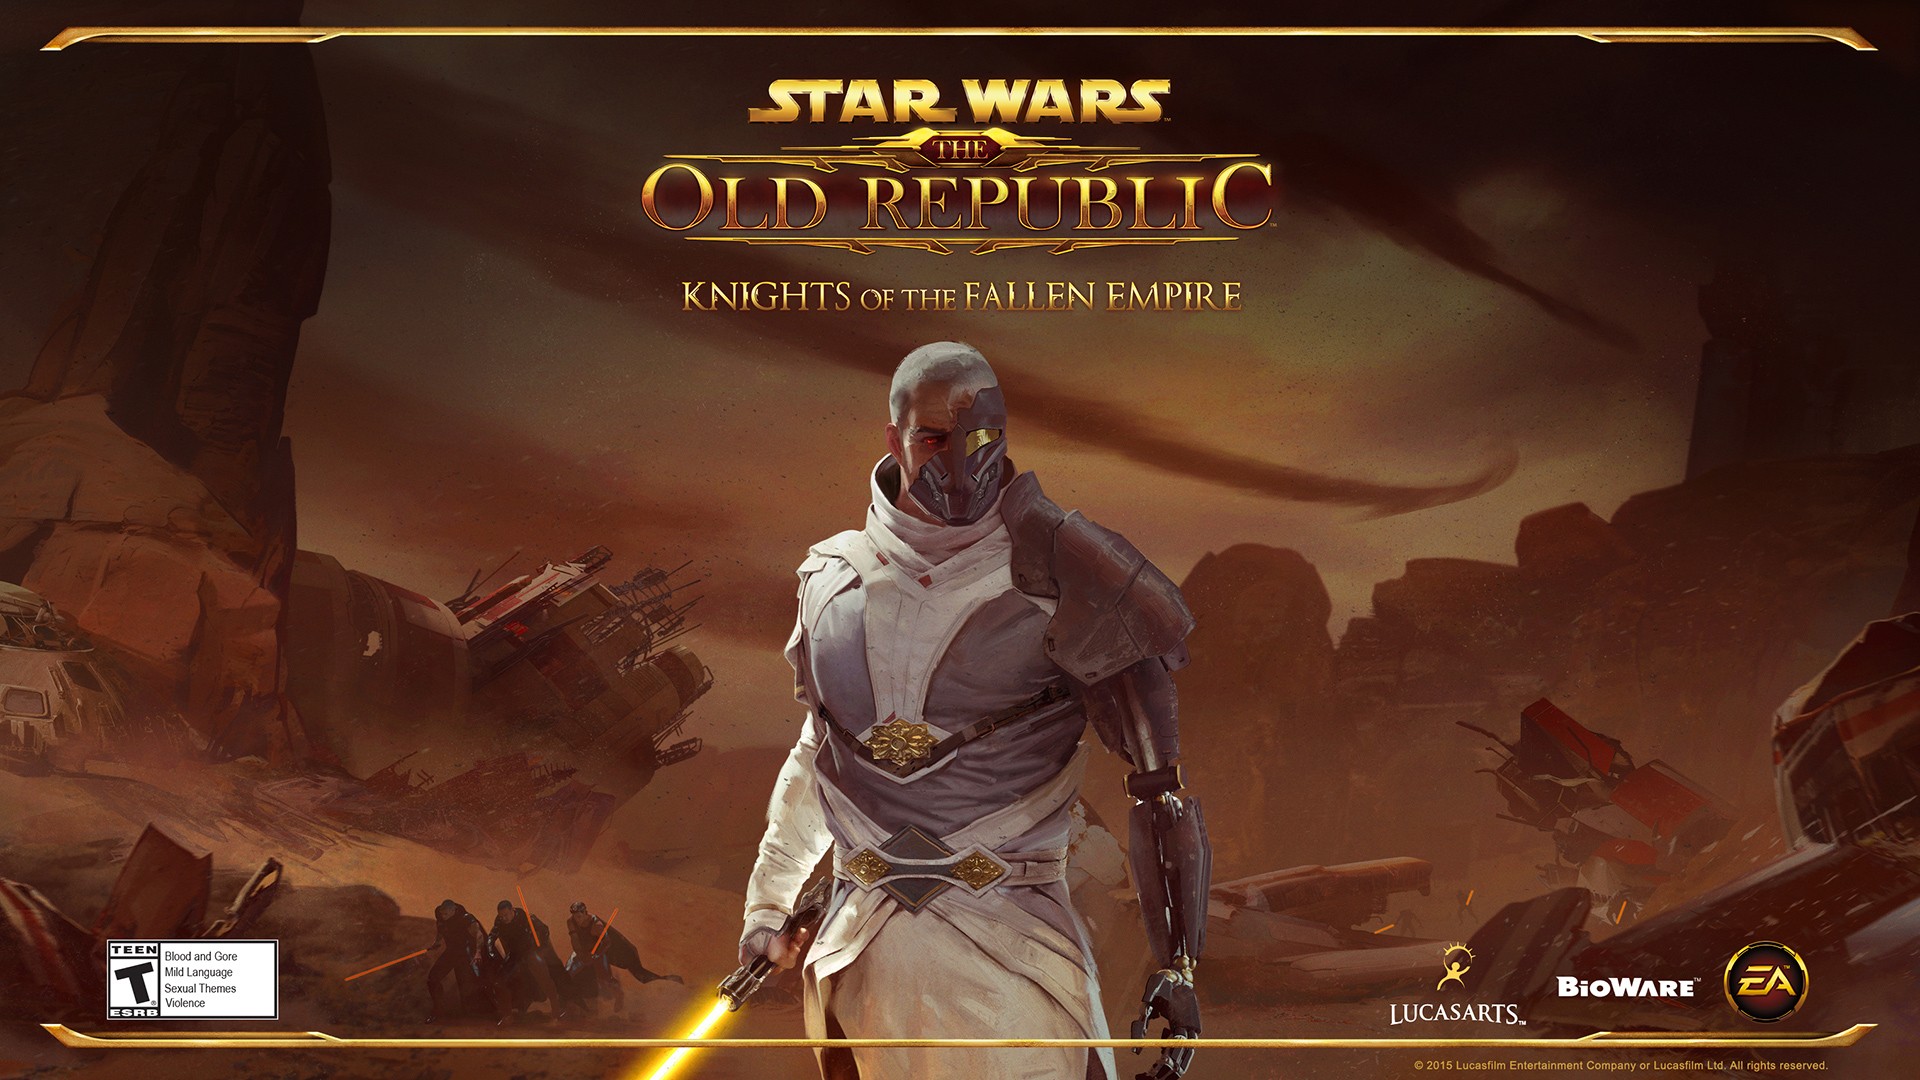 Old Republic at War mod for Star Wars: Empire at War